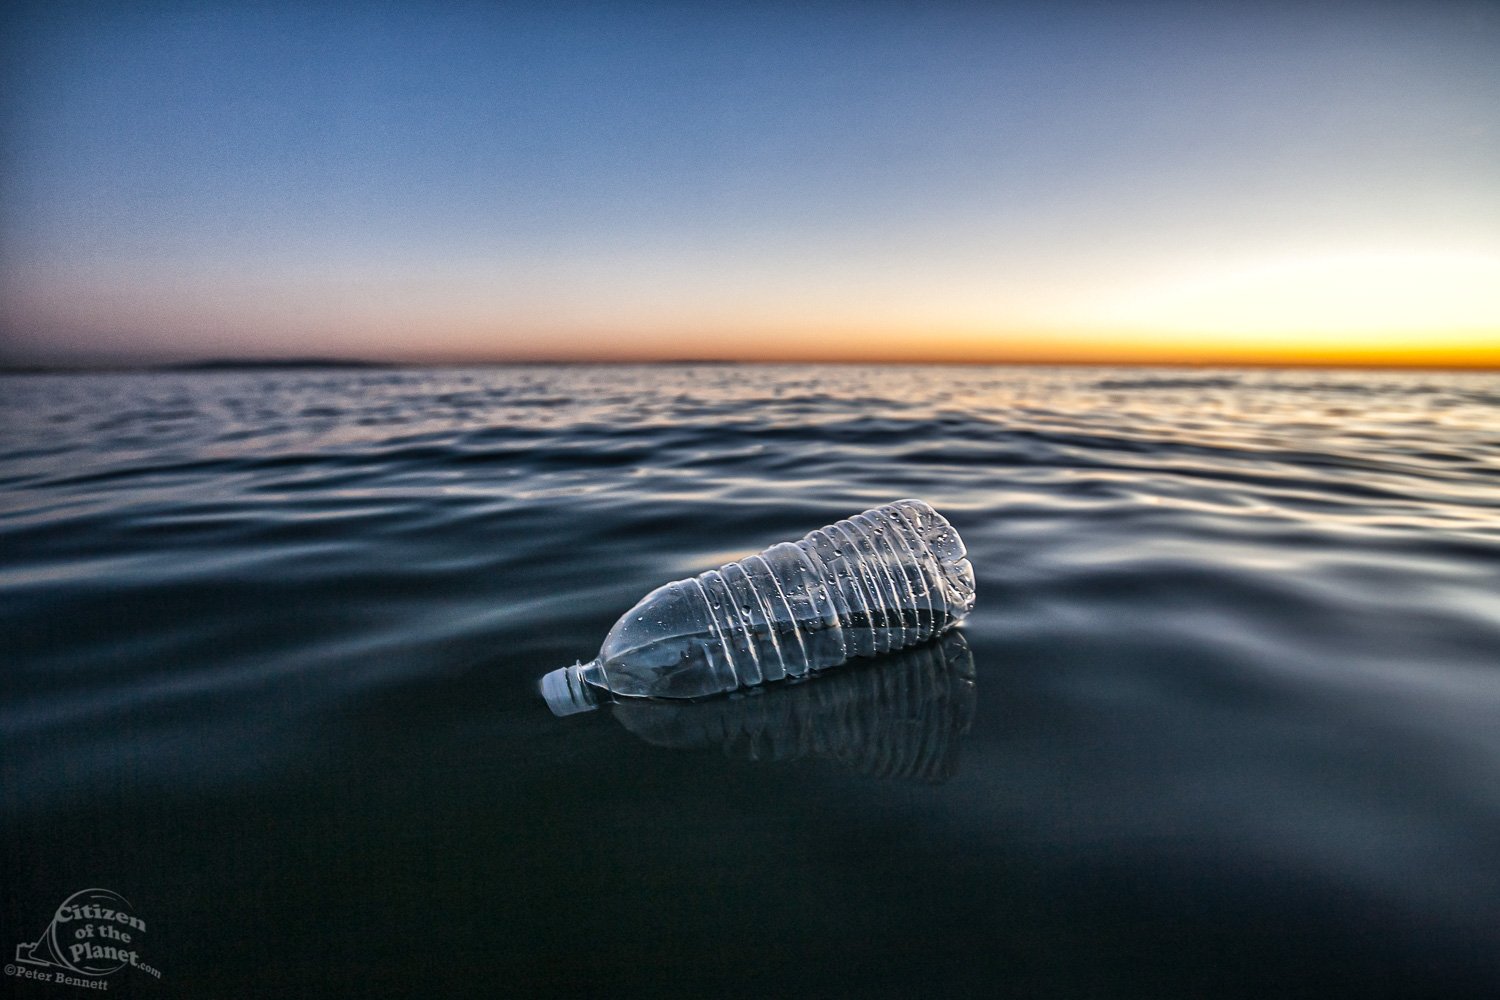  Plastic water bottle floating in Pacific Ocean 